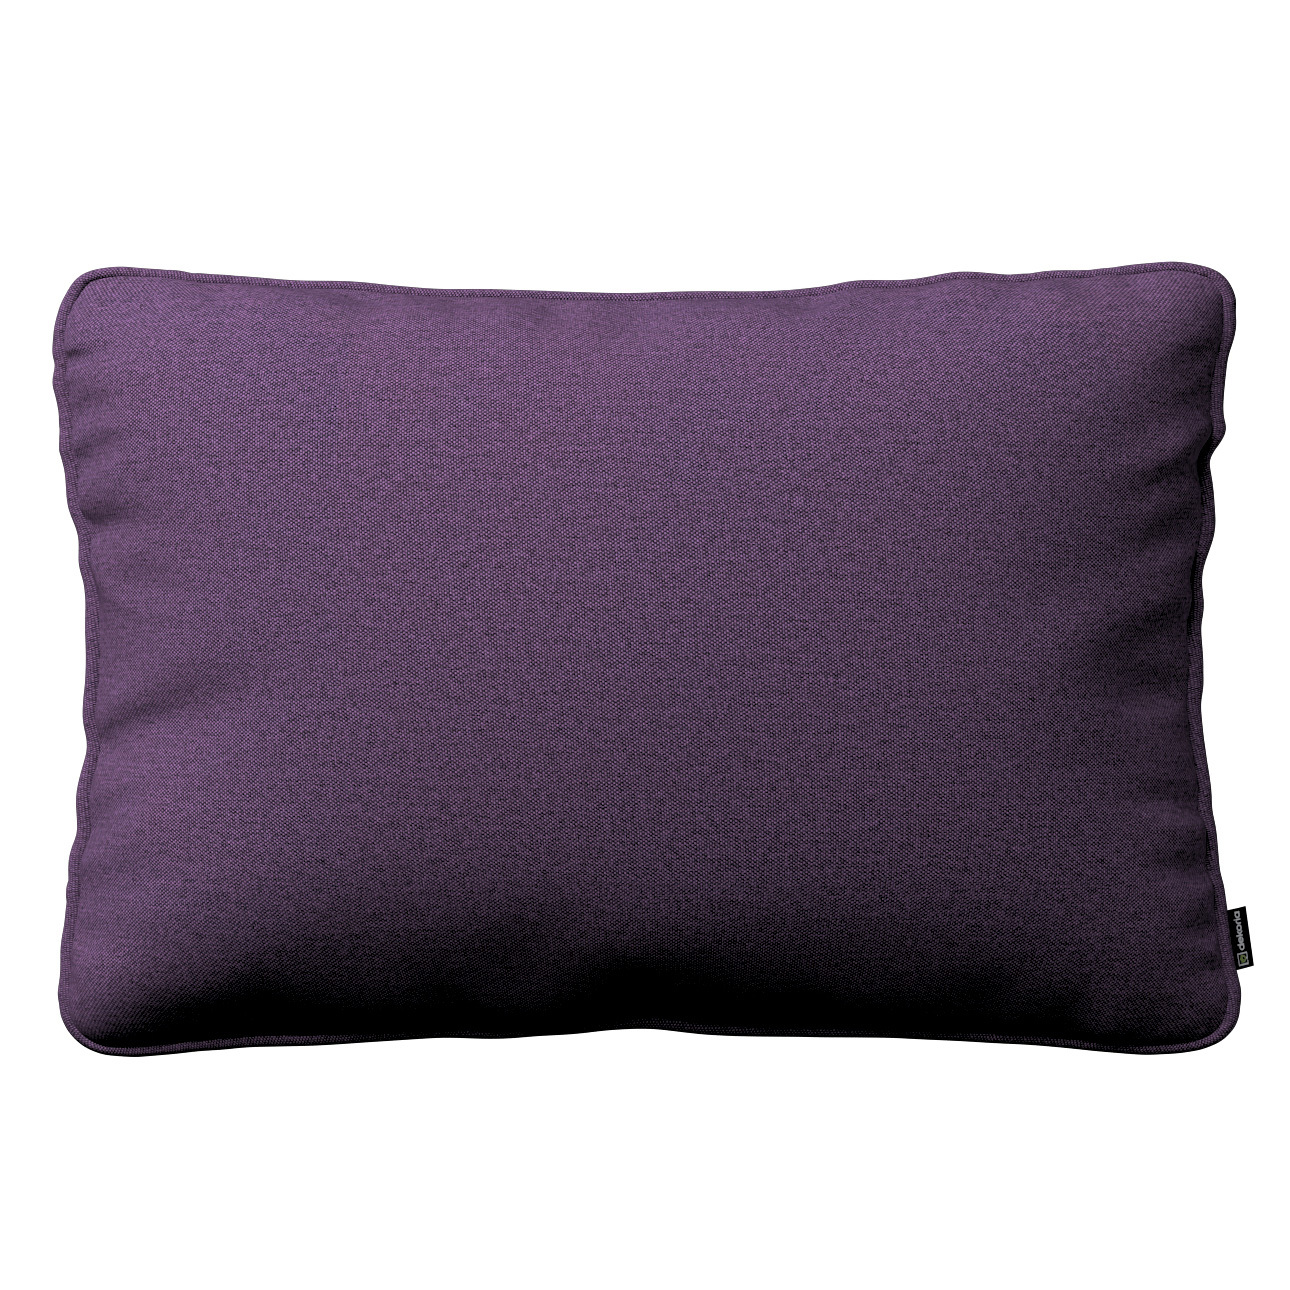 Kissenhülle Gabi mit Paspel 60x40cm, violett, 60 x 40 cm, Etna (161-27) günstig online kaufen